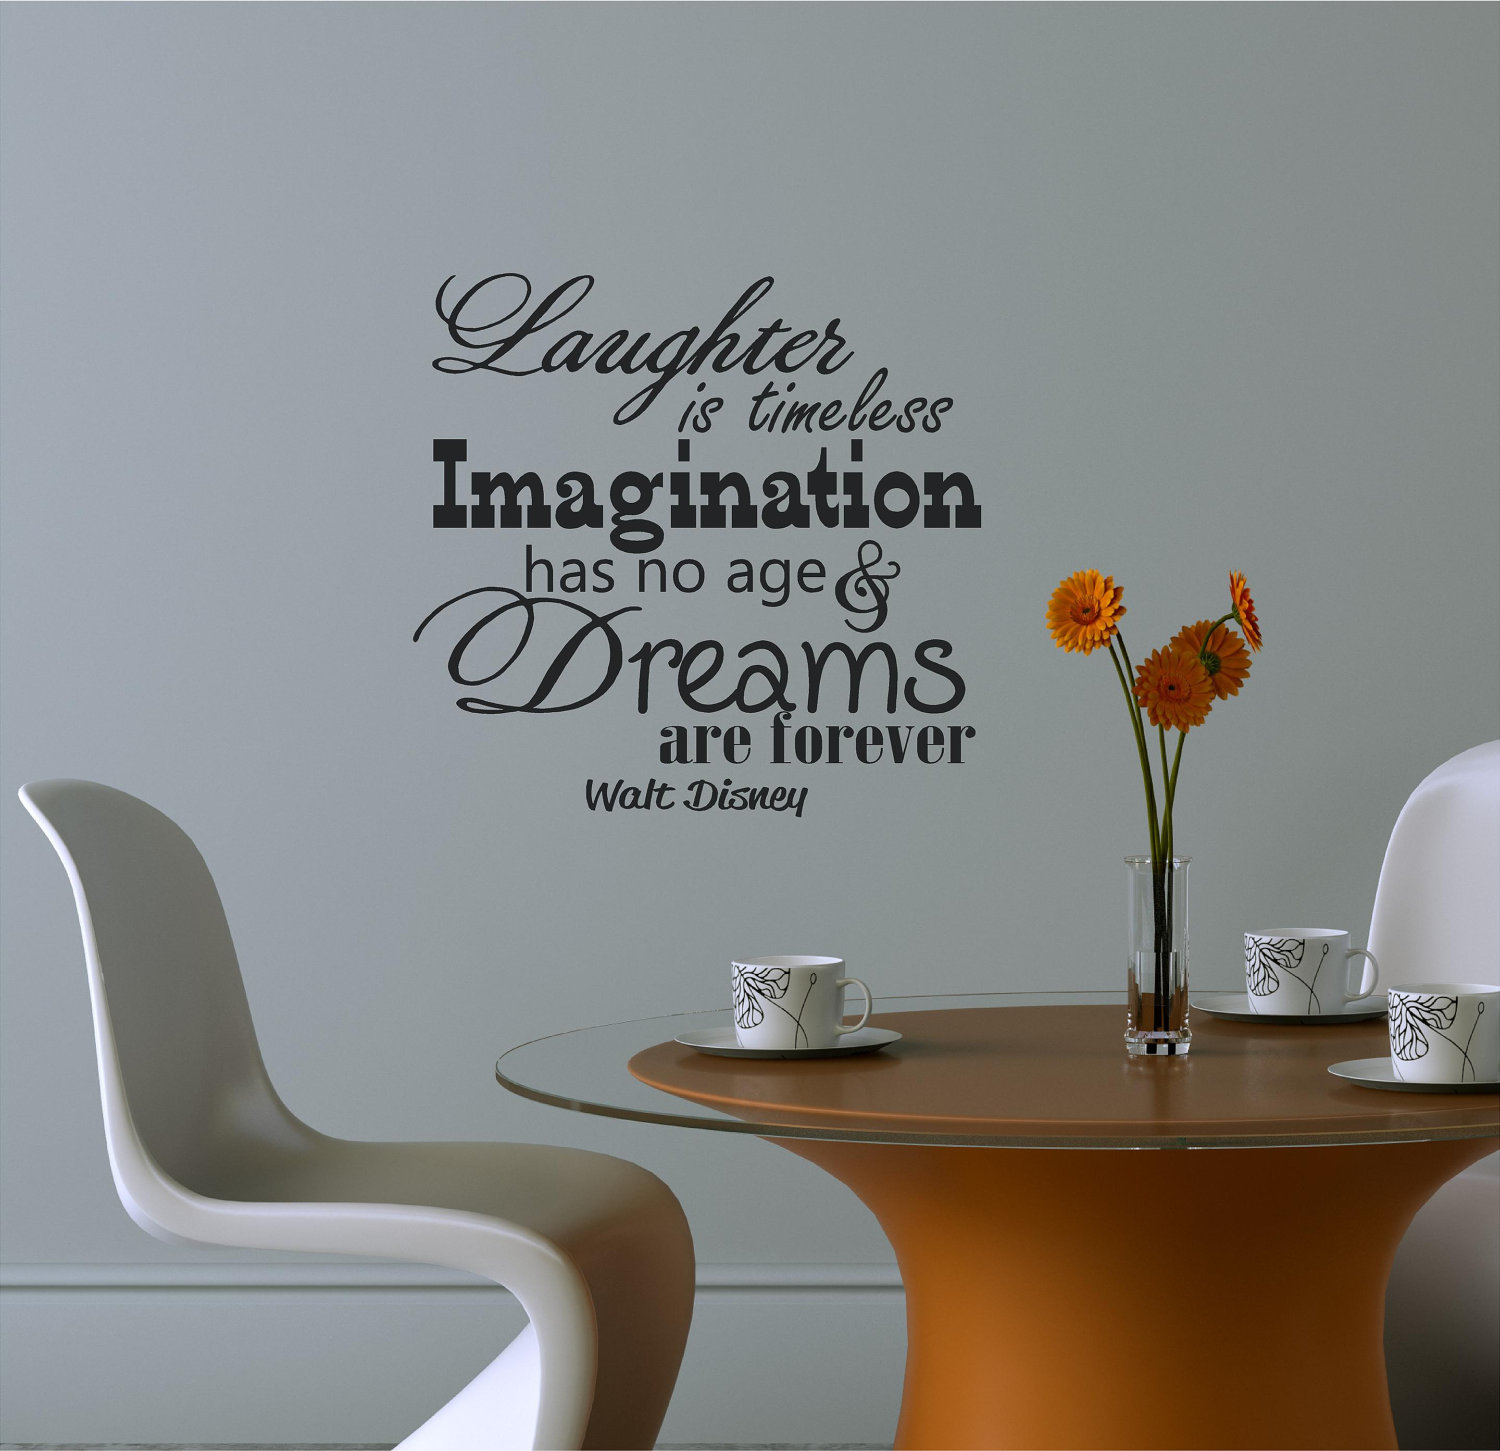 Imagination most